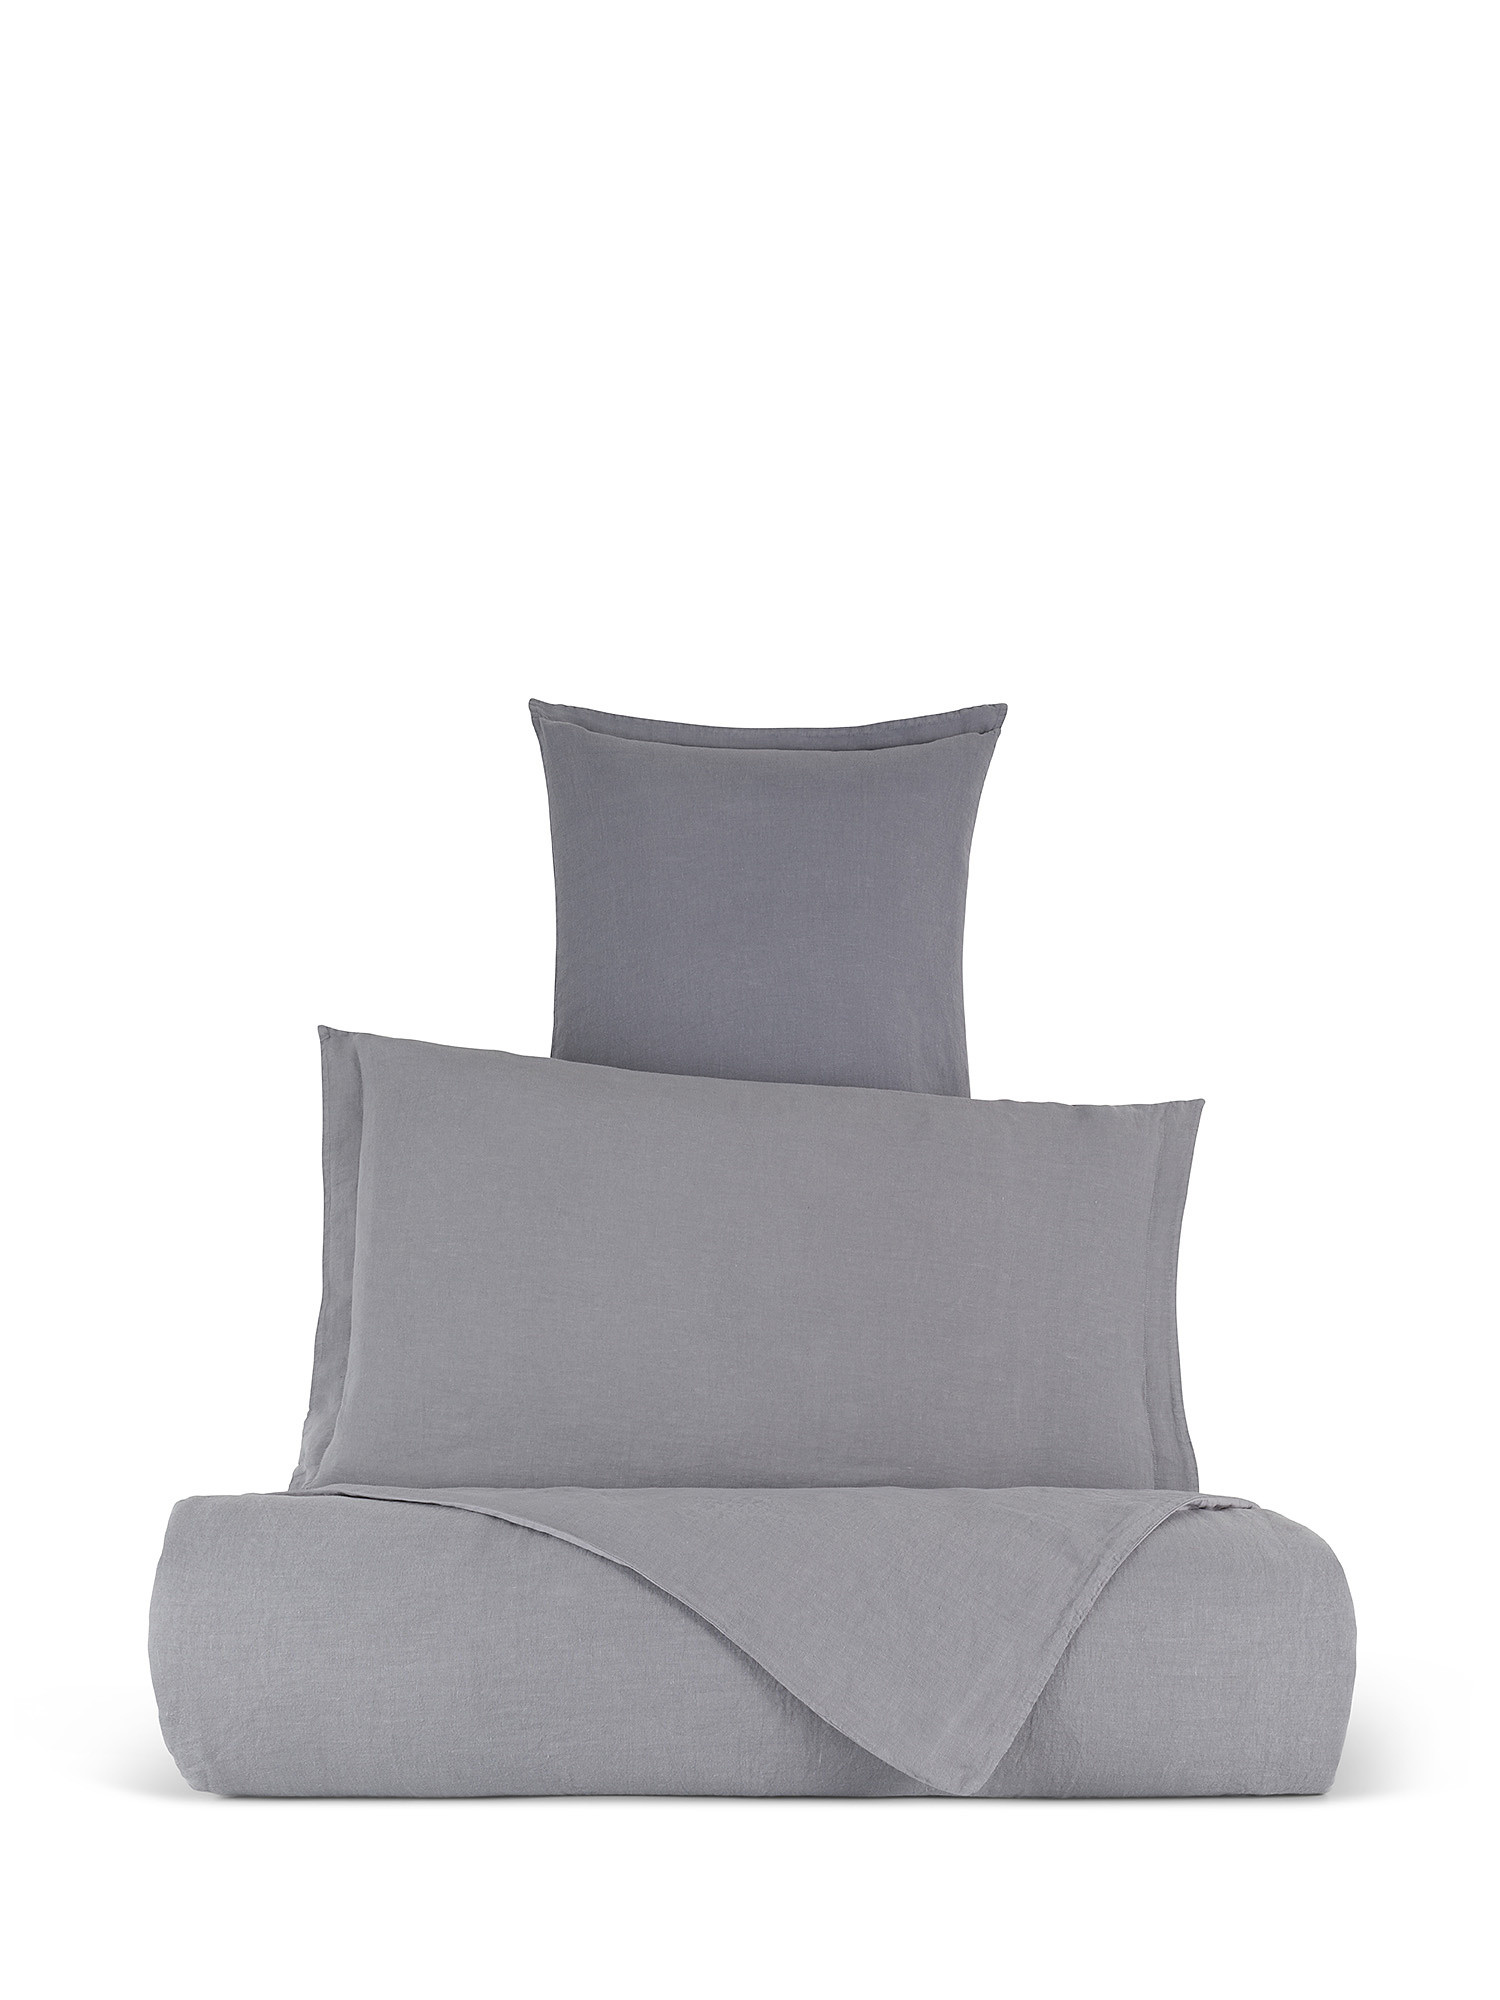 Zefiro plain color linen and cotton pillowcase, Dark Grey, large image number 2